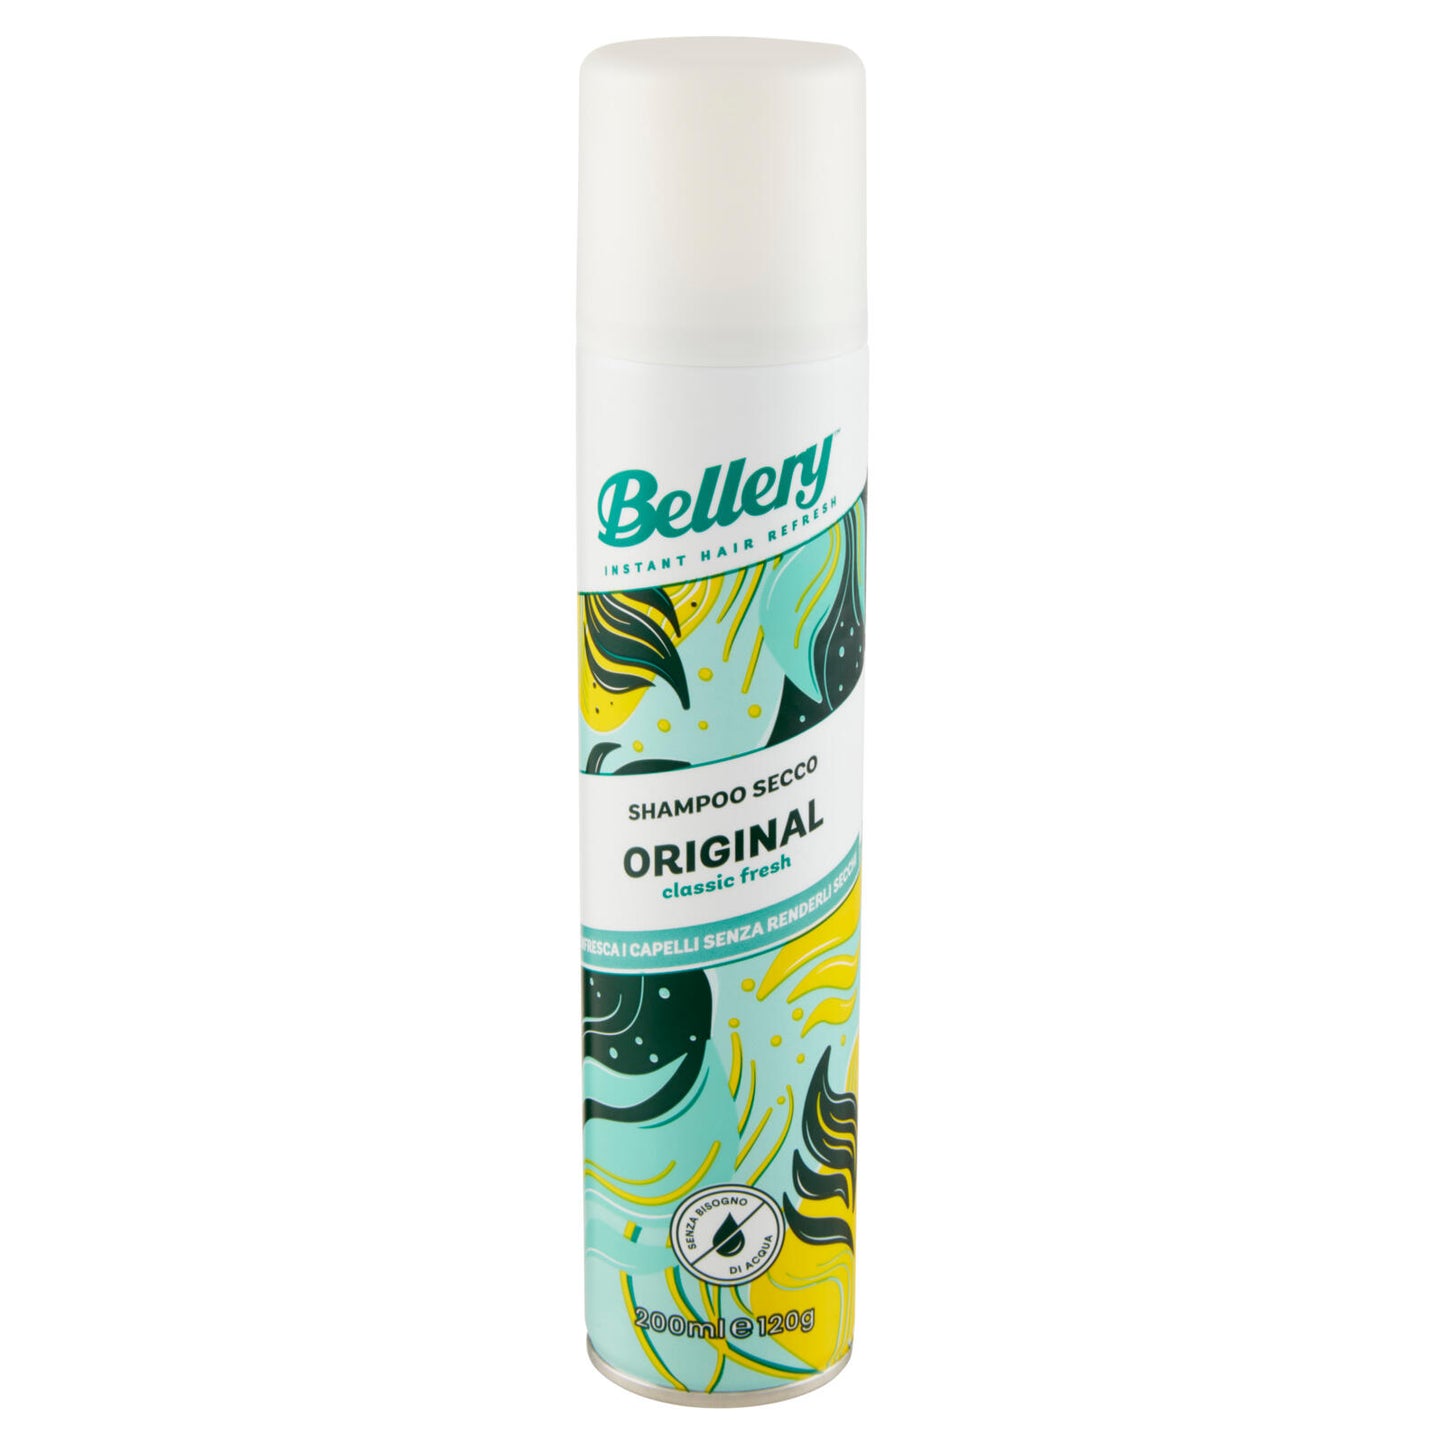 Bellery Shampoo Secco Original classic fresh 200 ml